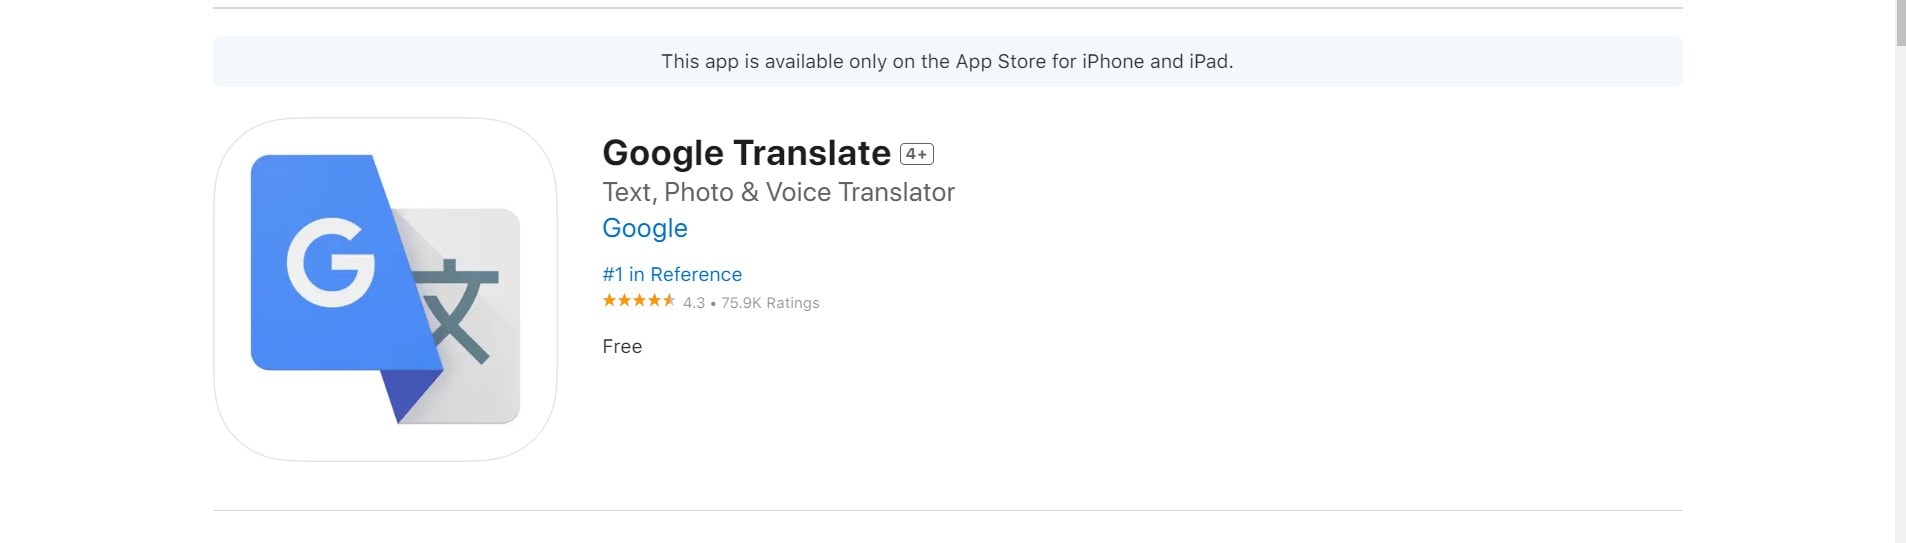 google translate for iphone and ipad